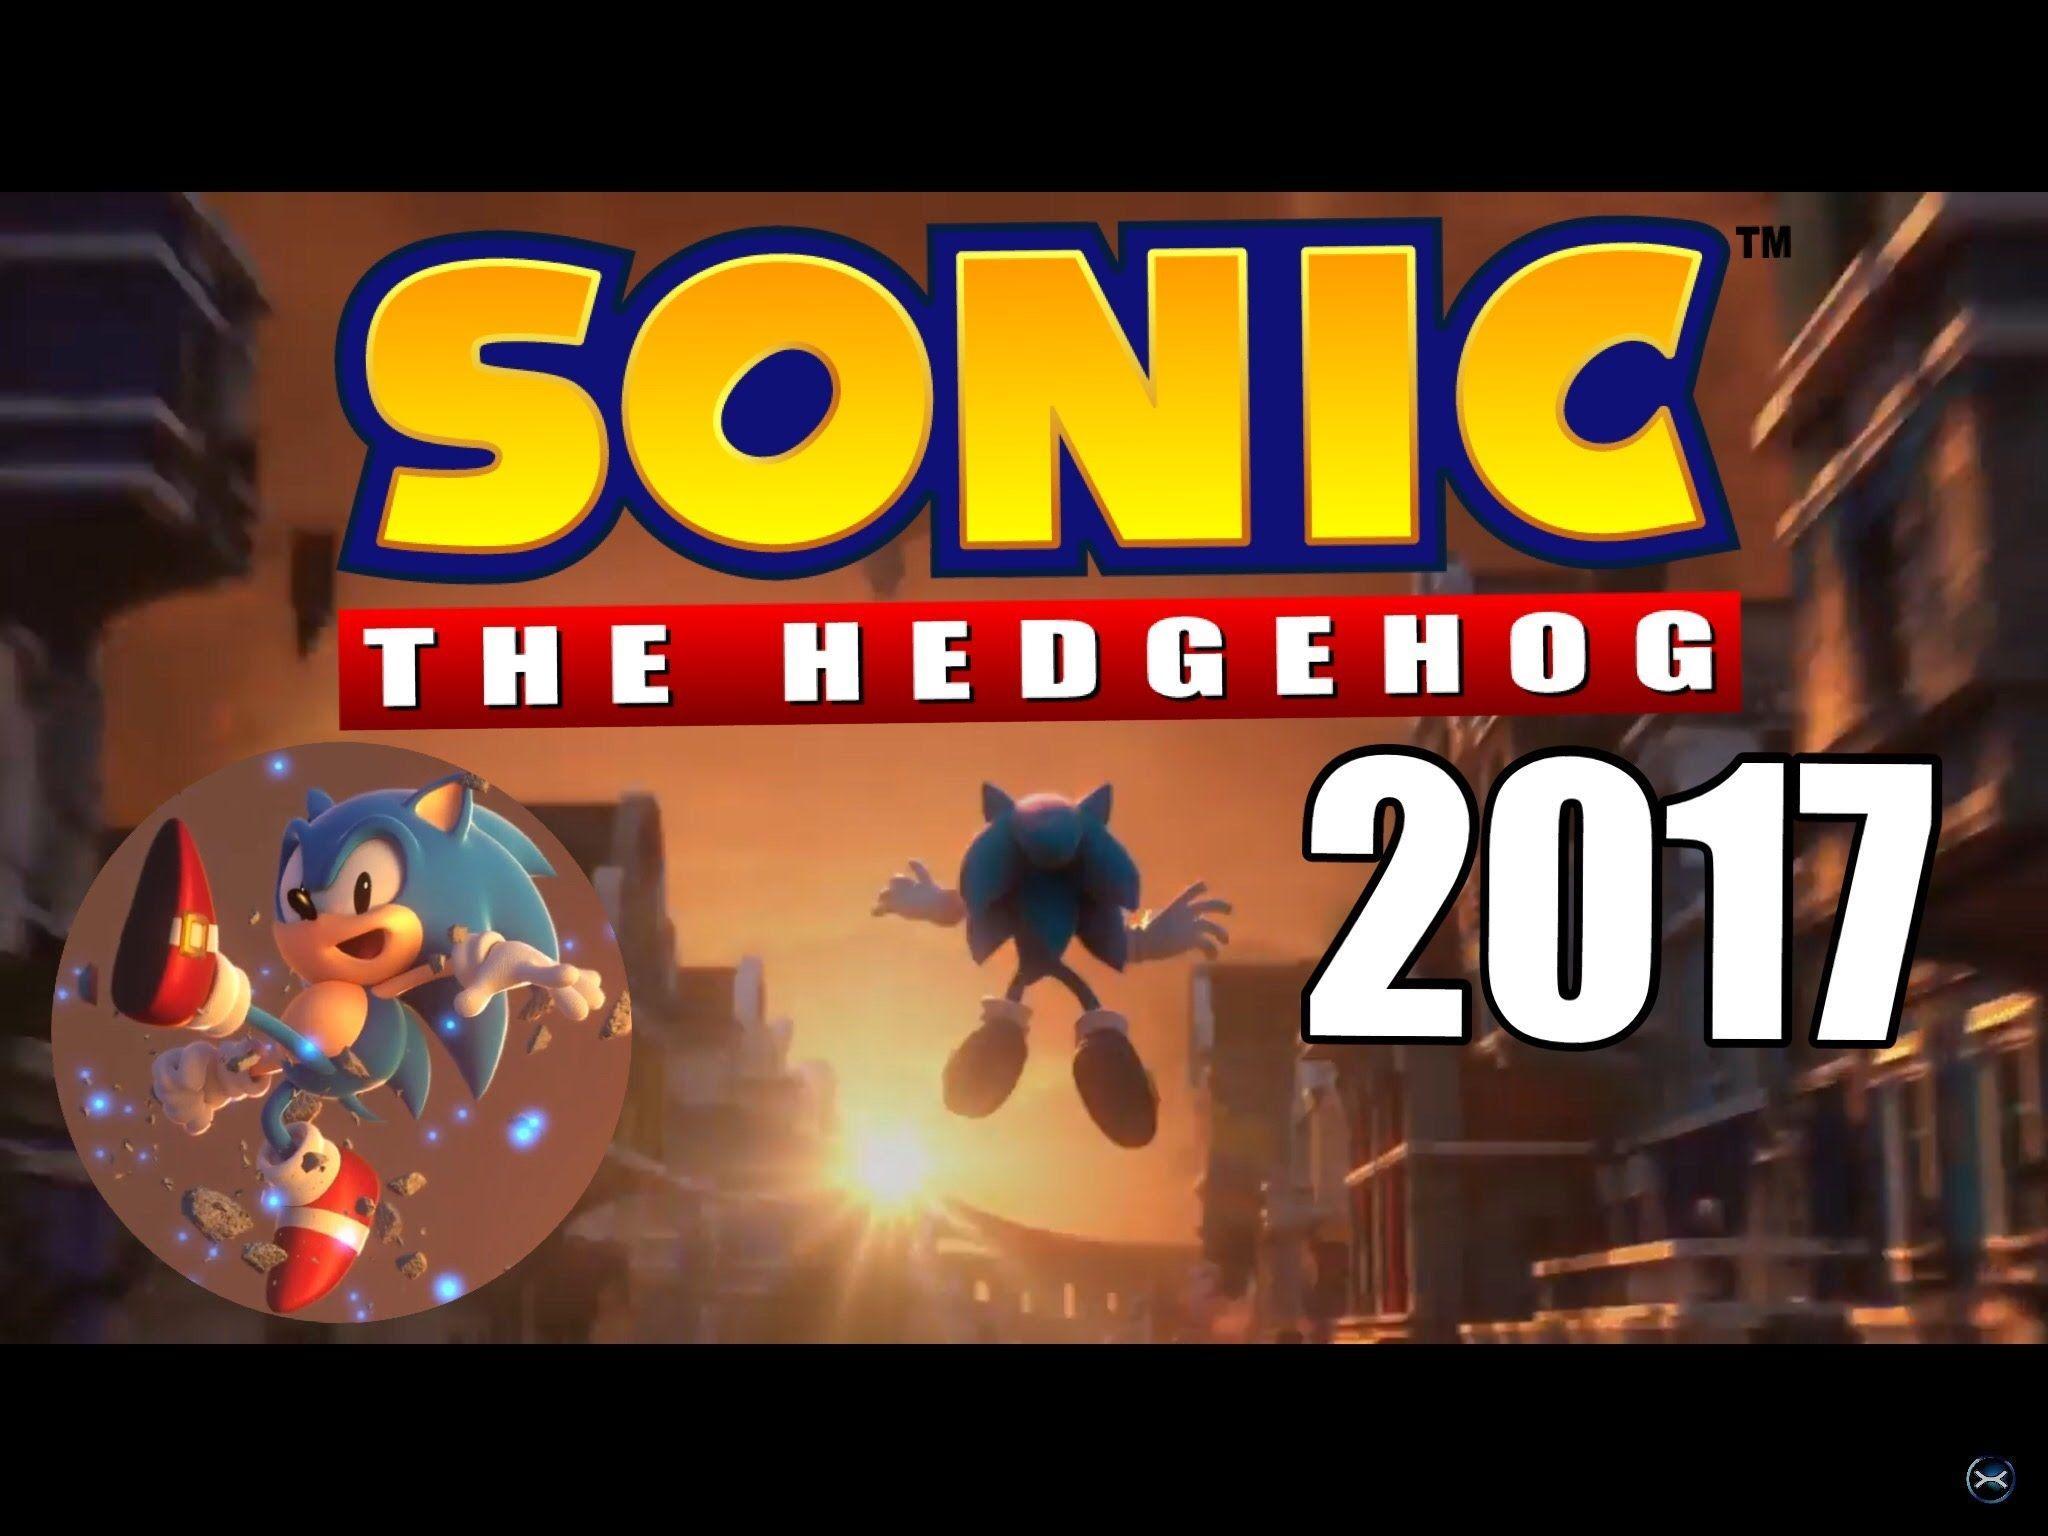 Sonic the Hedgehog 2017